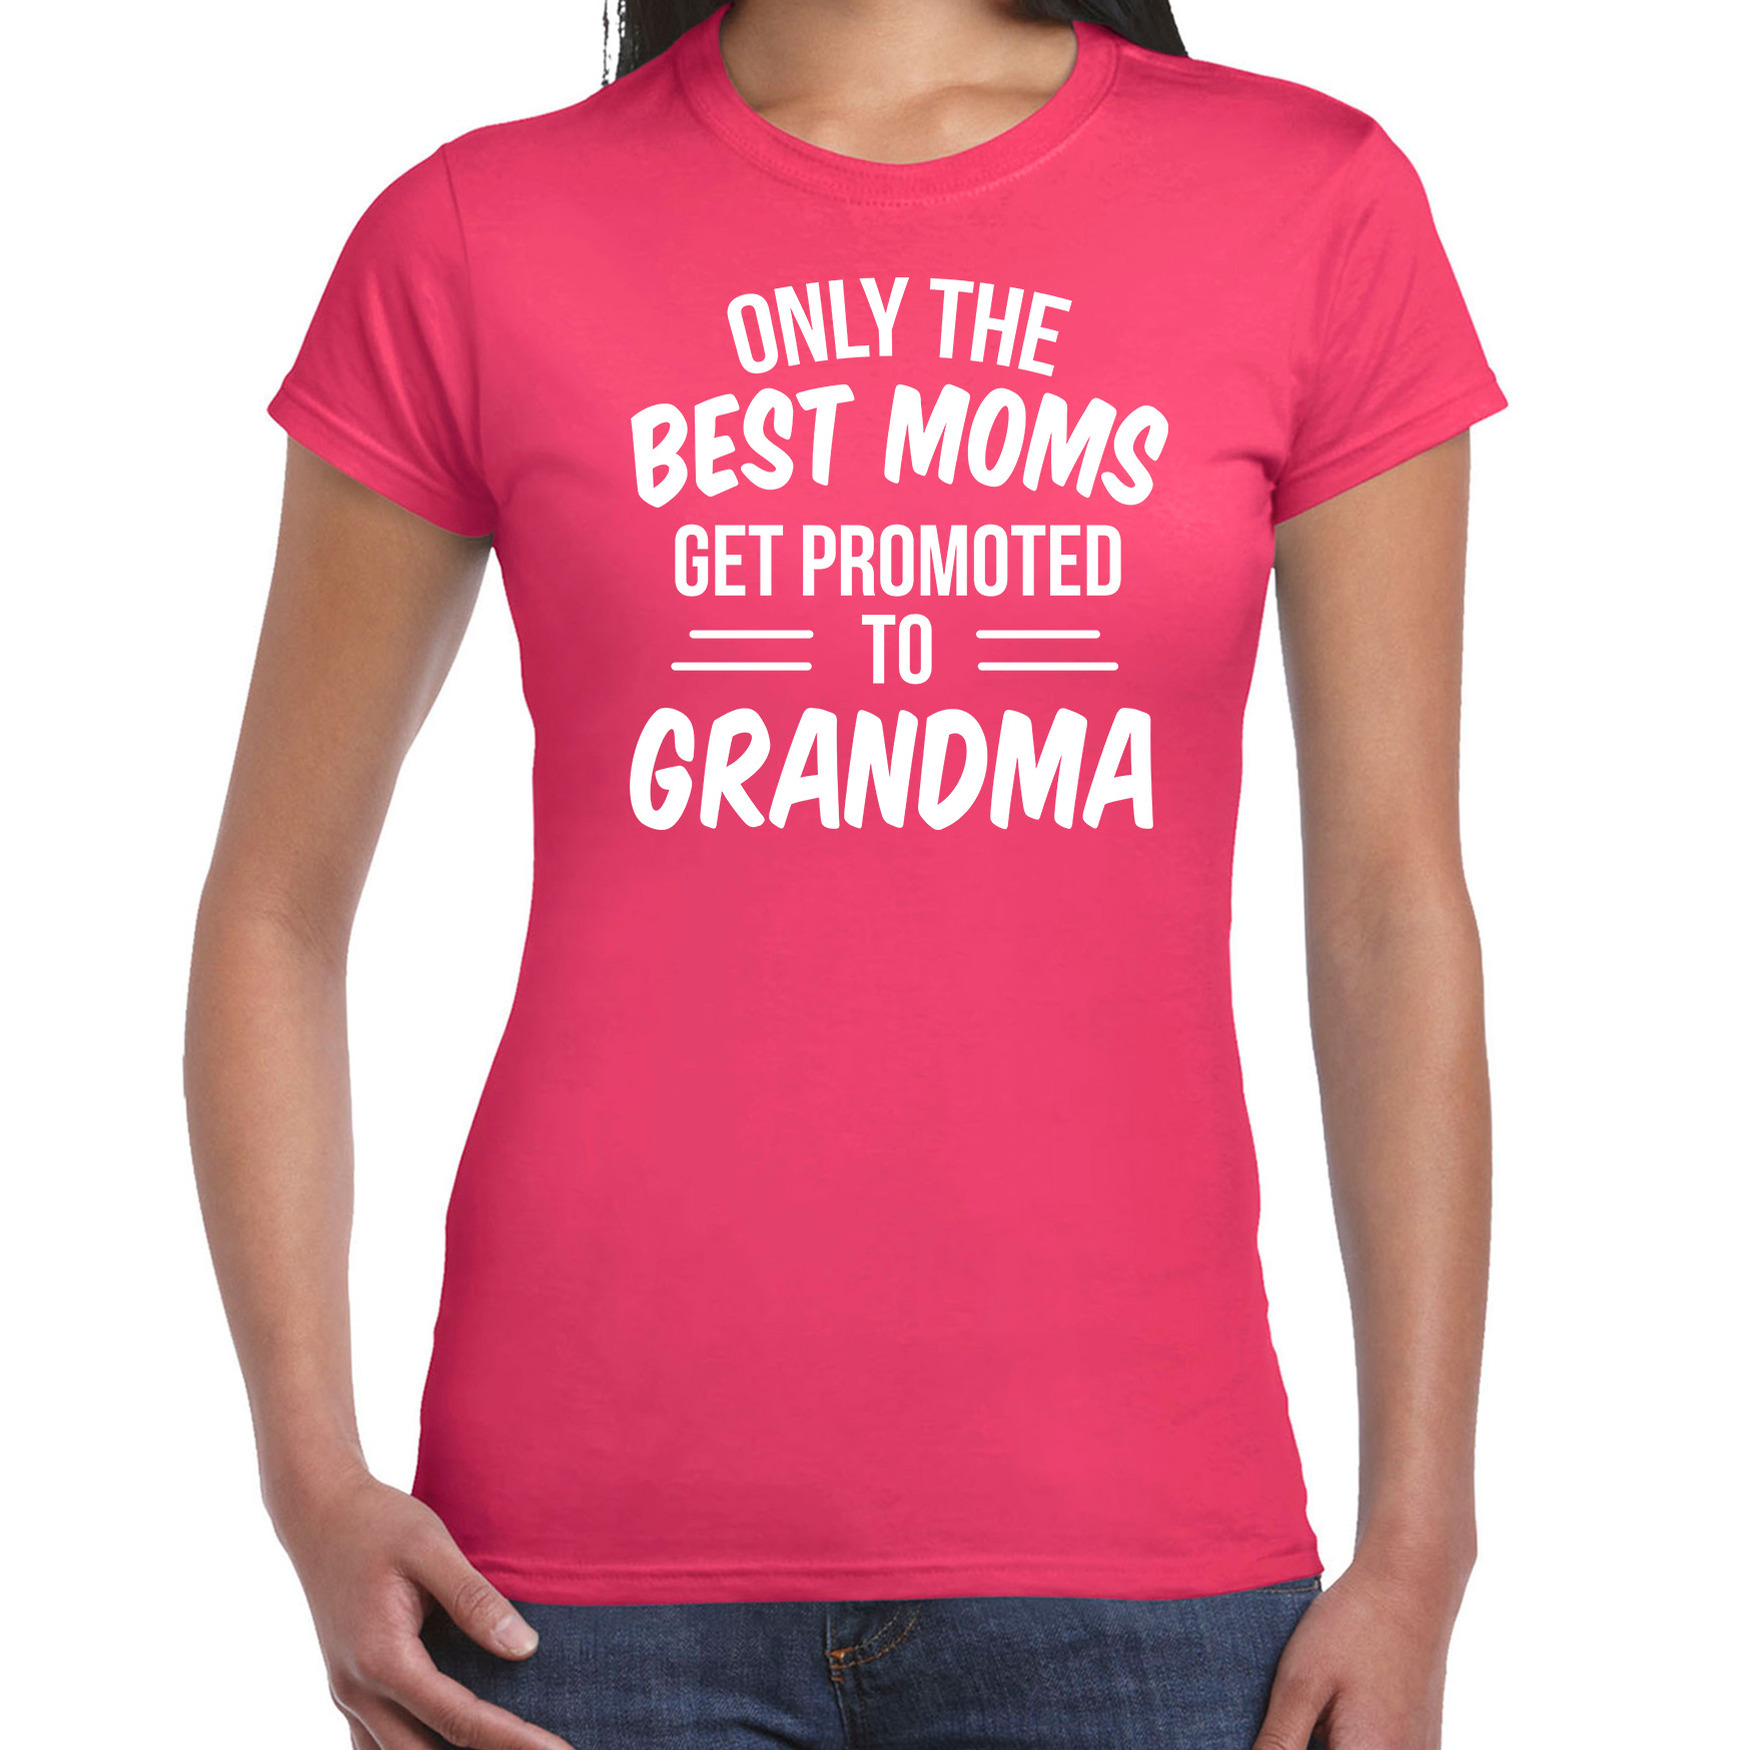 Only the best moms get promoted to grandma t-shirt fuchsia roze dames - Aankondiging zwangerschap